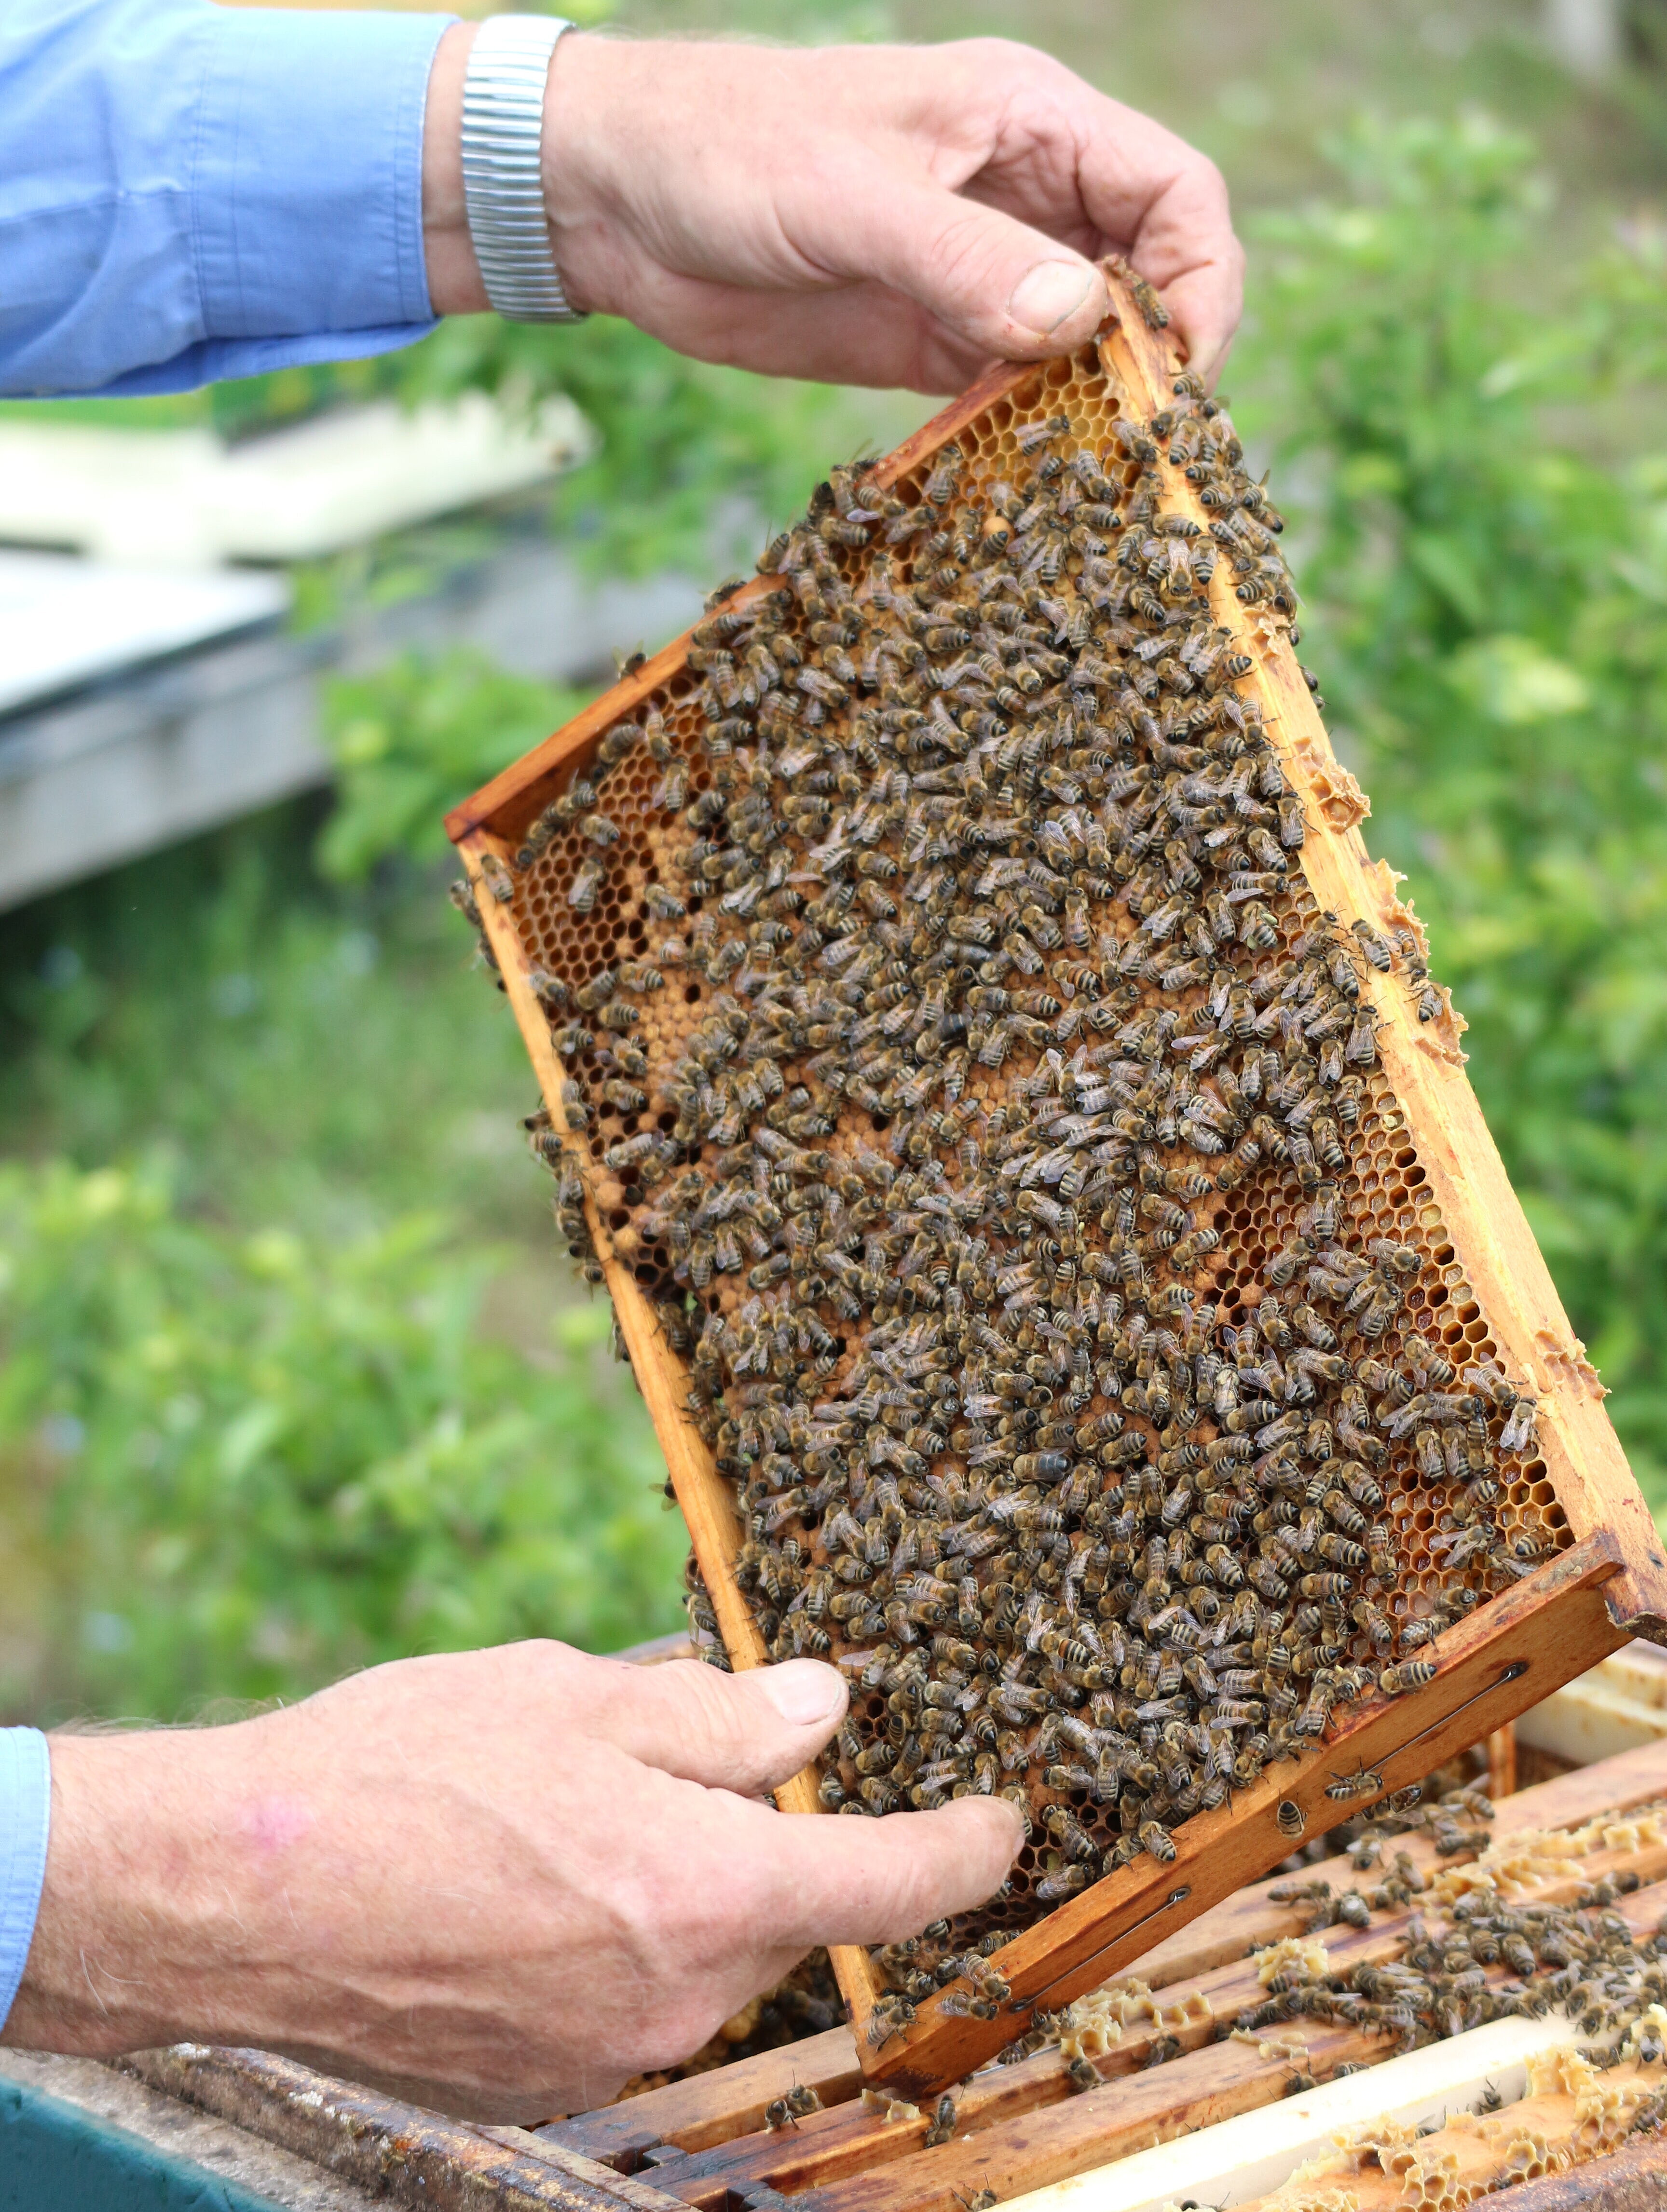 Hoheward-Imker zeigt Bienenwaben